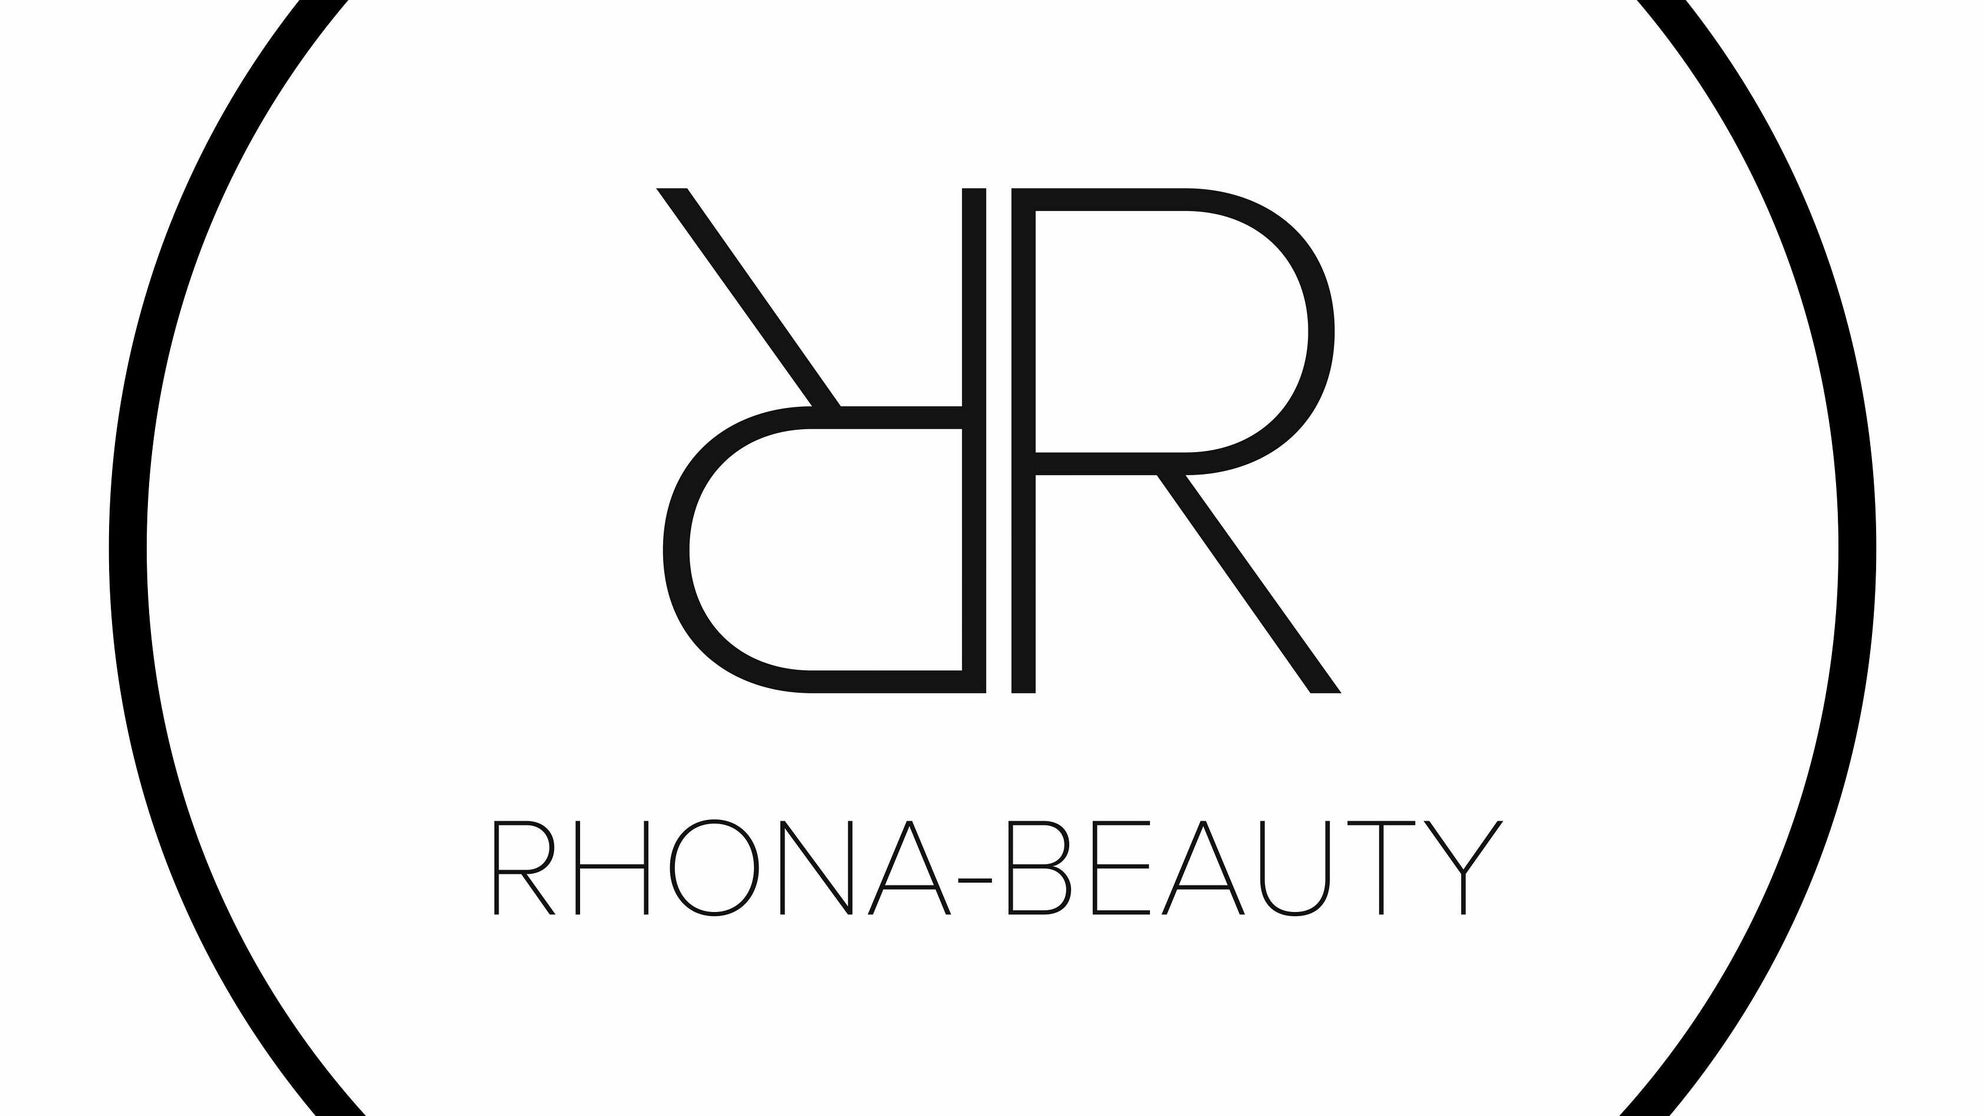 Rhona beauty business logo